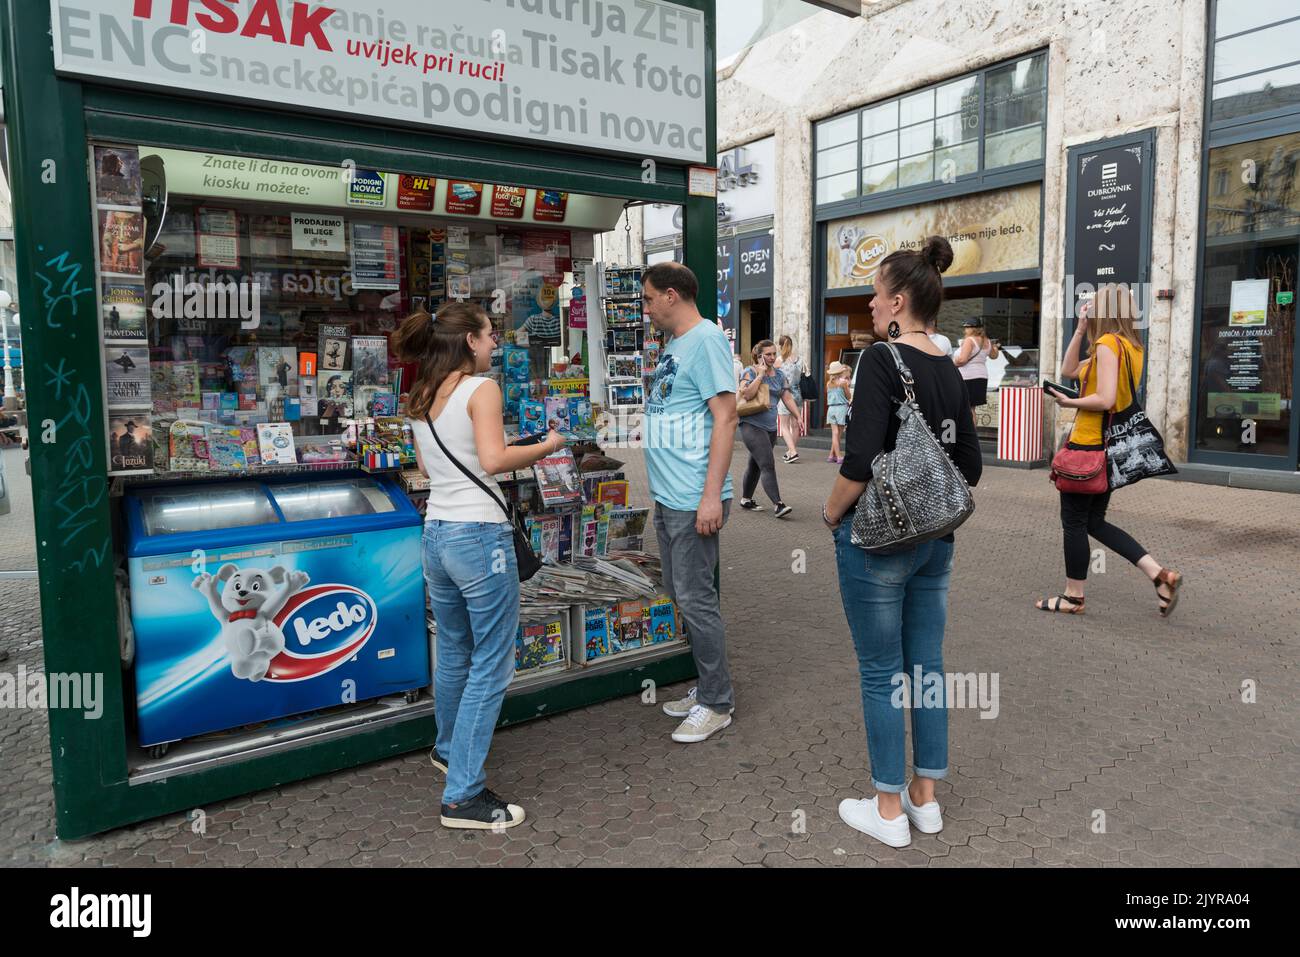 A Tisak kiosk selling items like sunglasses,umbrellas, cigarettes, lighters, magazines, batteries and much more. Zagreb, Croatia, Europe Stock Photo